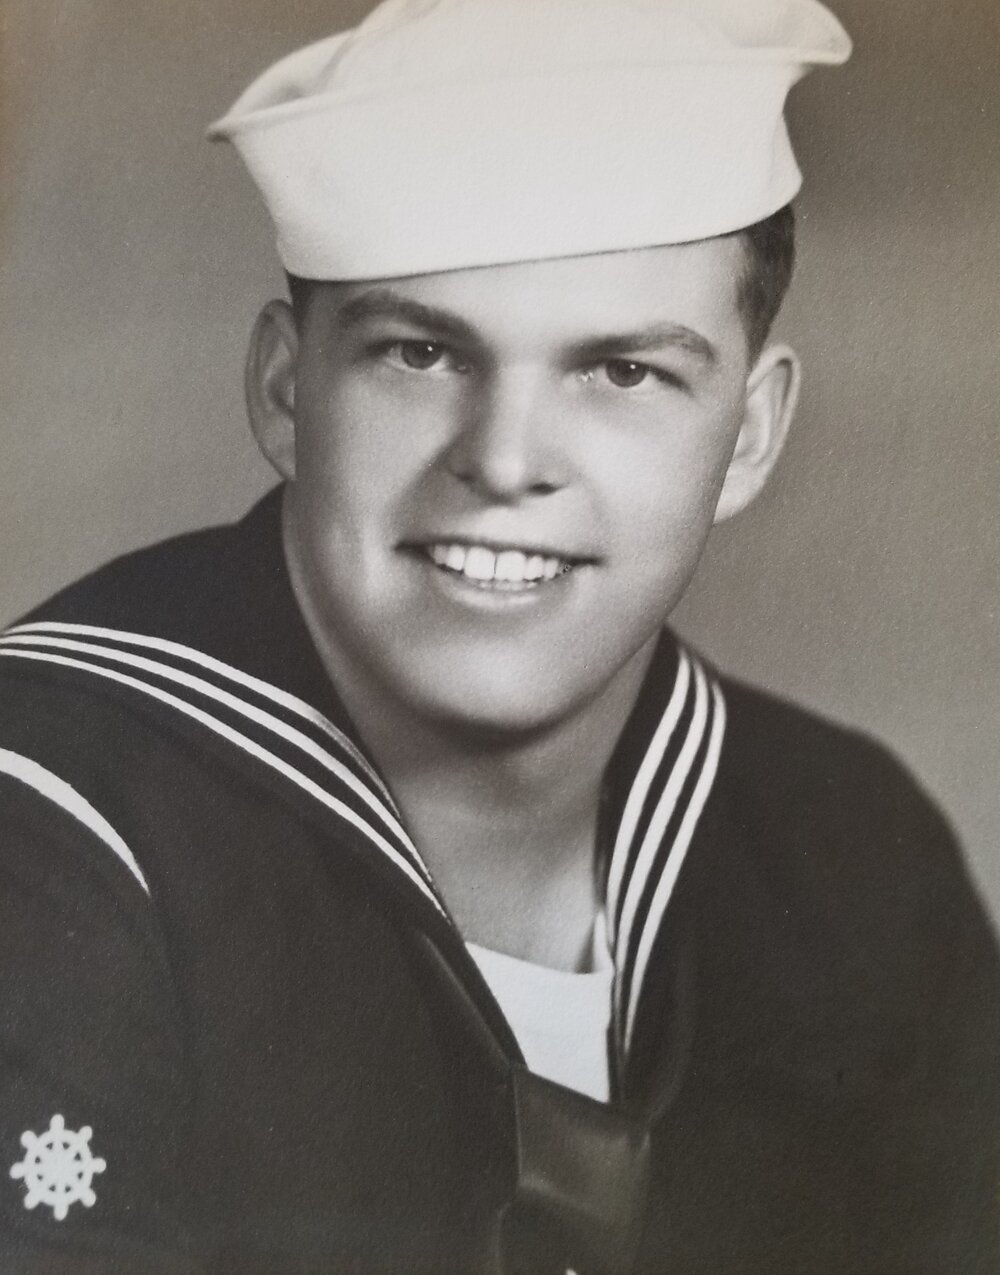  Ulysses Bauer in US Navy uniform, 1944-1946 